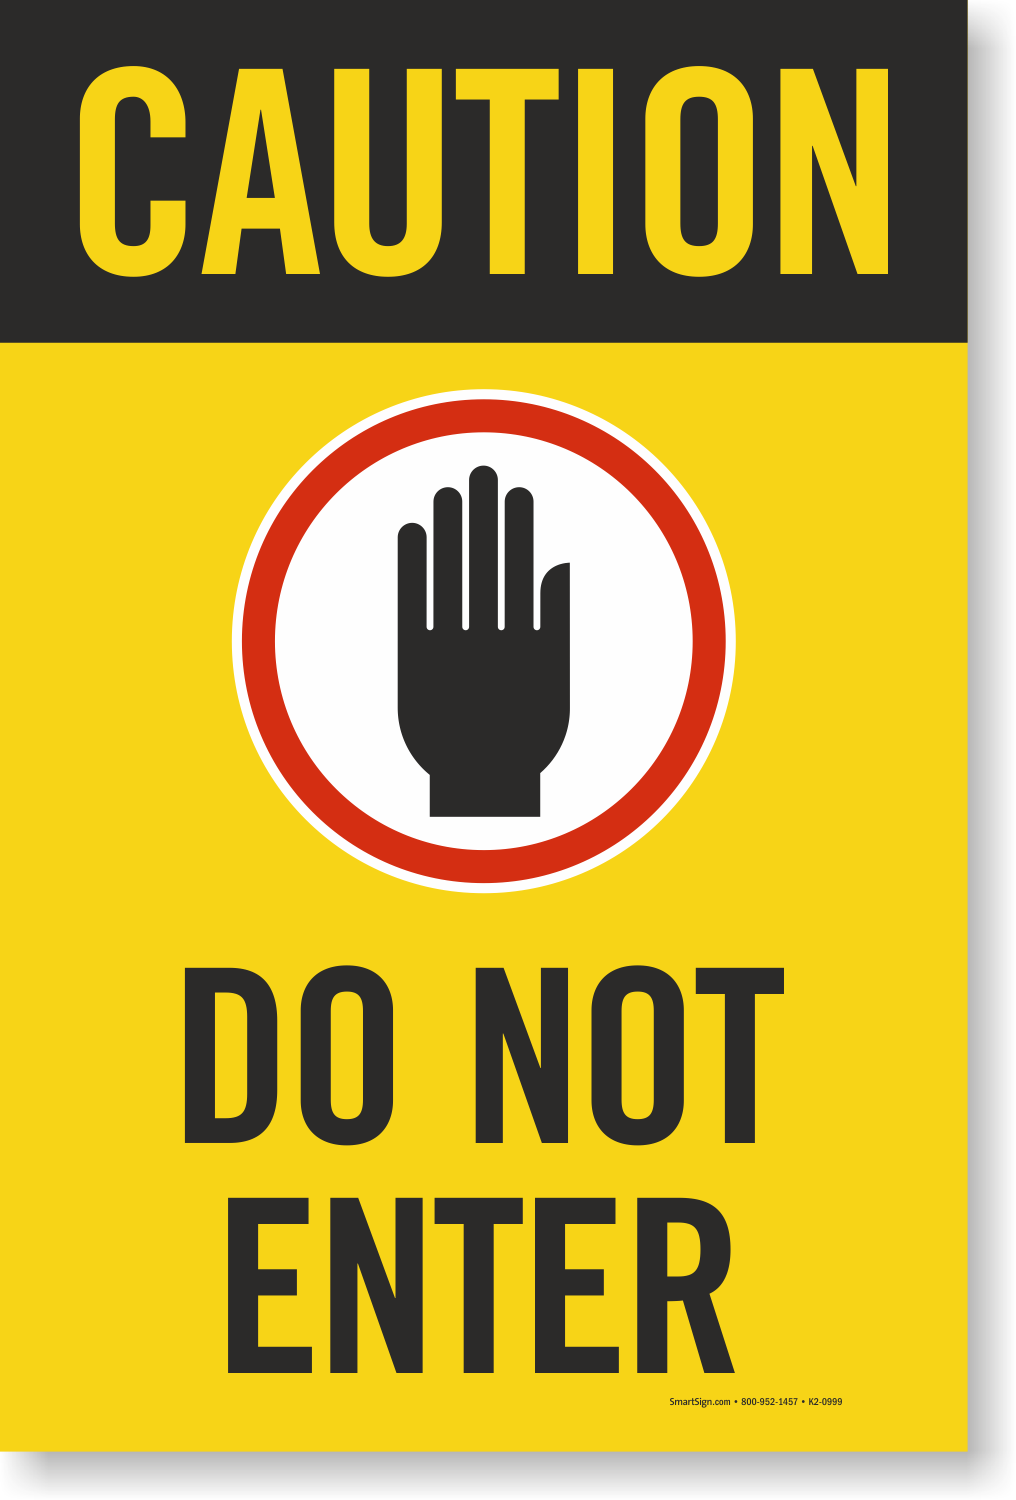 Caution Do Not Enter Sign Insert, SKU - K2-0999